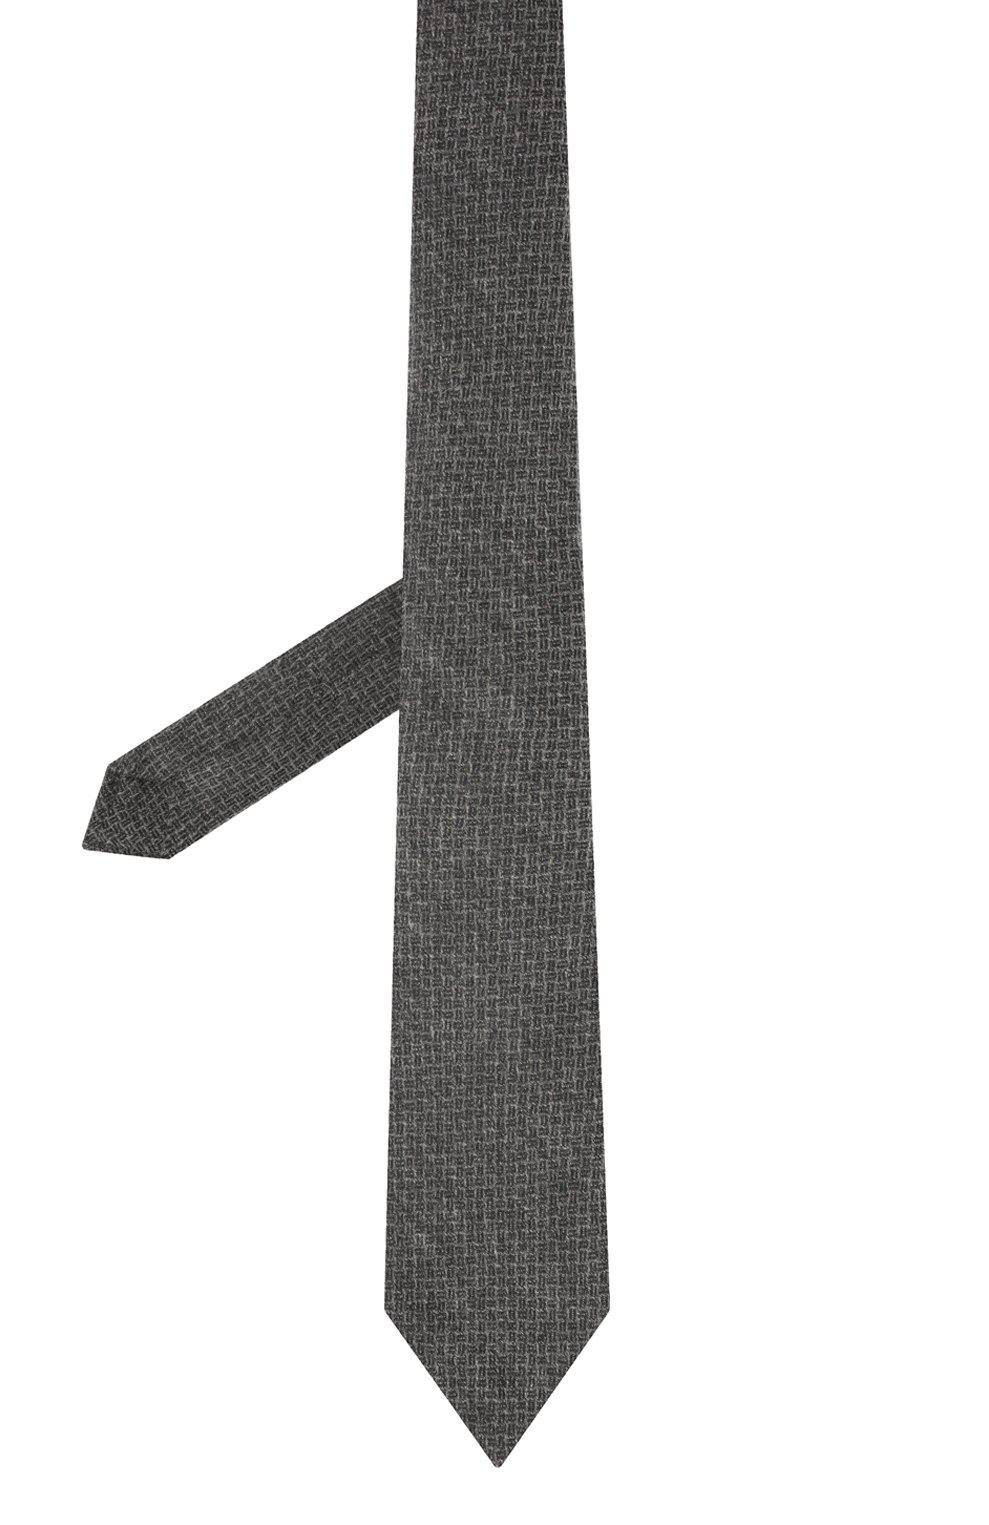 Кашемировый галстук, Kiton, 42 150 руб.